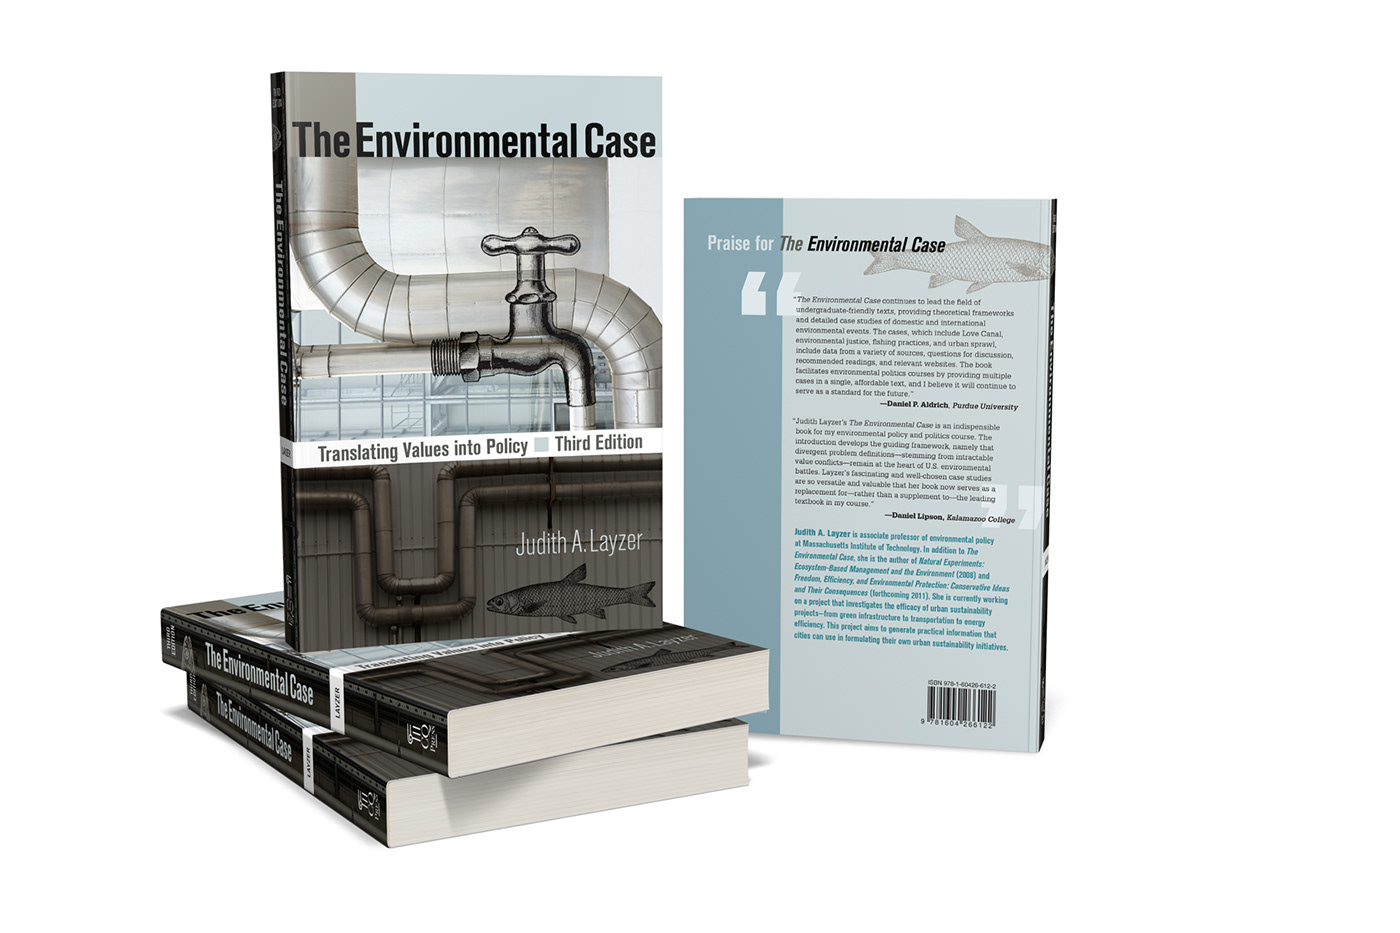 book covers books covers publishing   business books political science books nonfiction books nonprofit nonprofit publishing